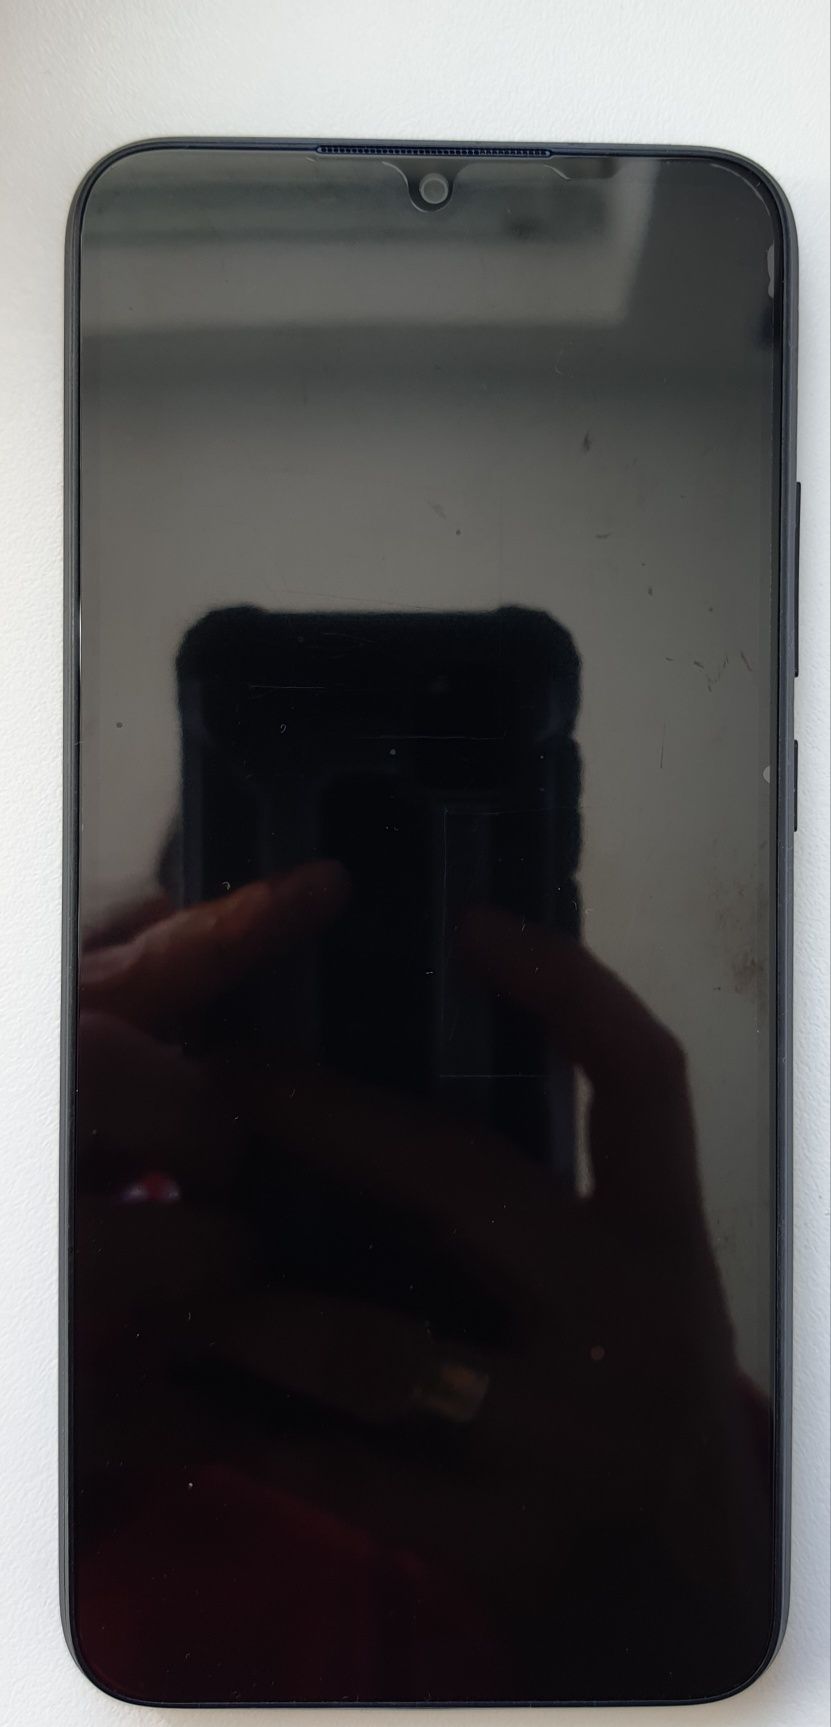 Xiaomi Redmi 9C NFC